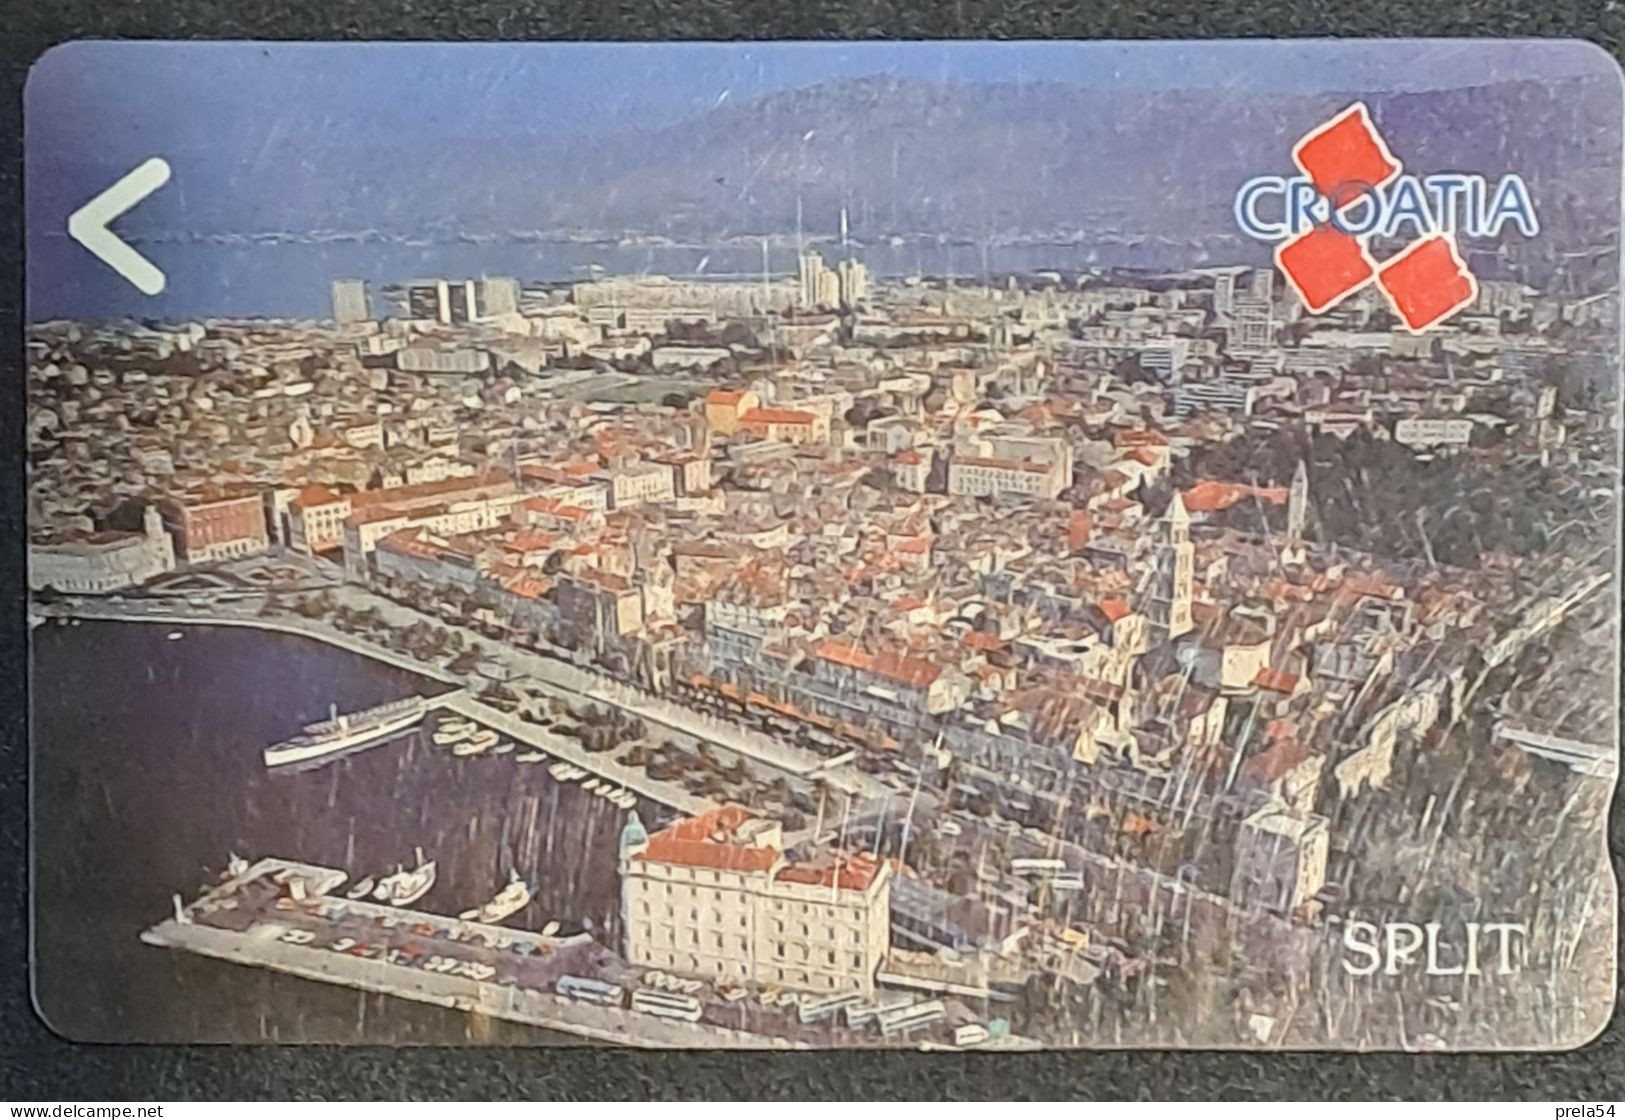 Croatia  - SPLIT Magnetic Card Used - Croazia